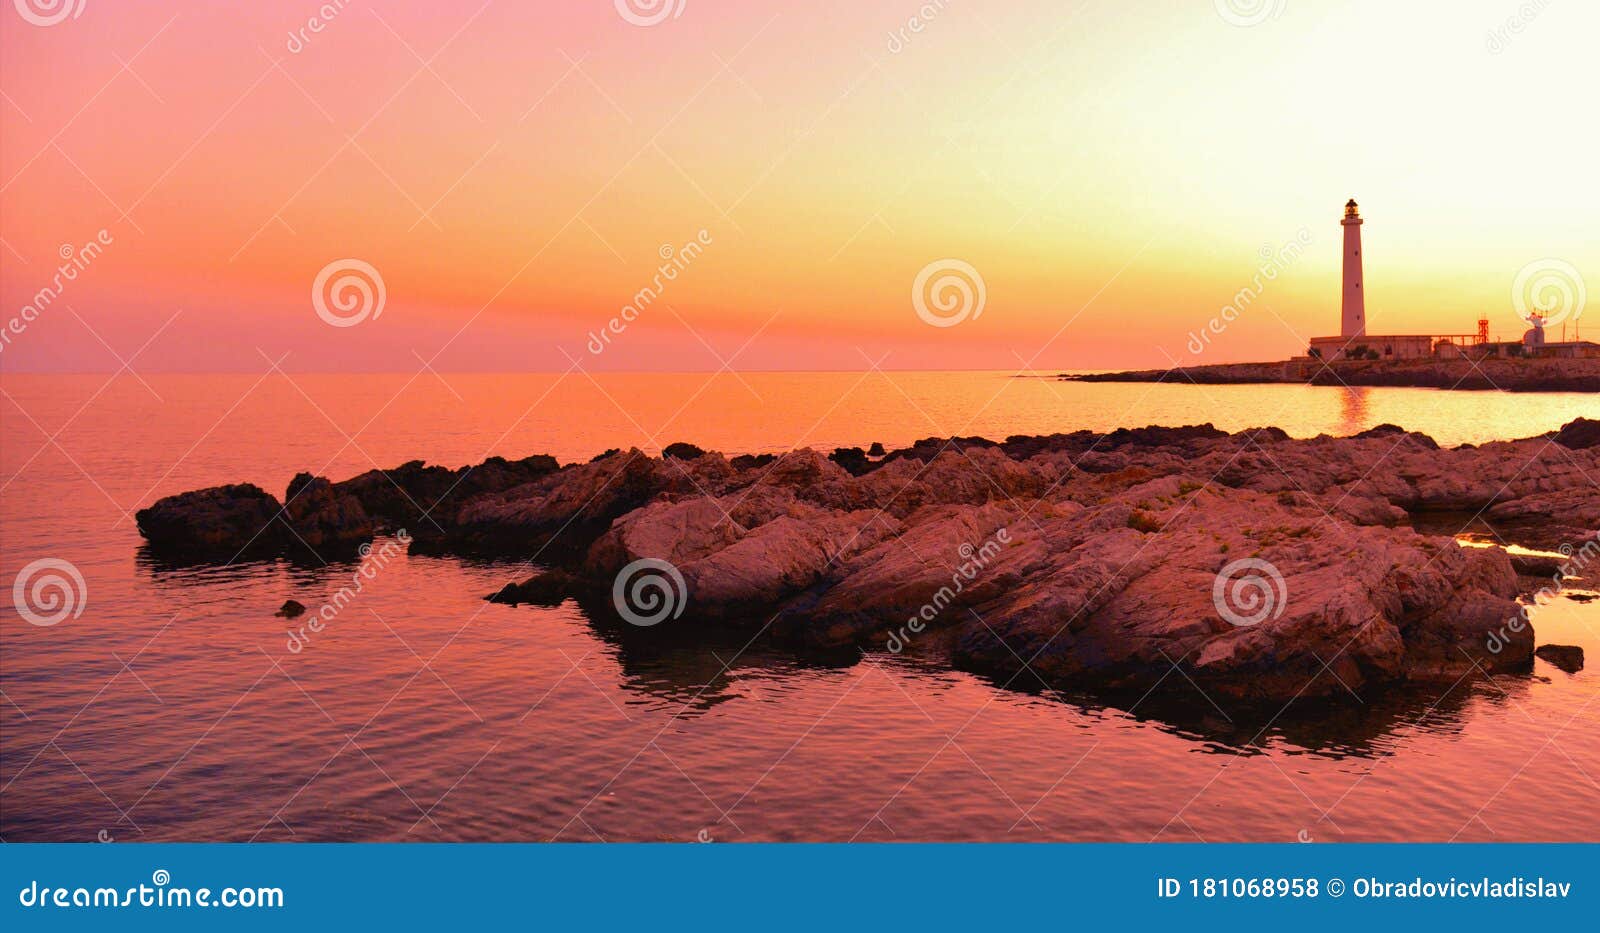 beautiful romantic colorful sunset on favignanaÃ¢â¬â¢s lighthouse - punta sottile, favignana - italy